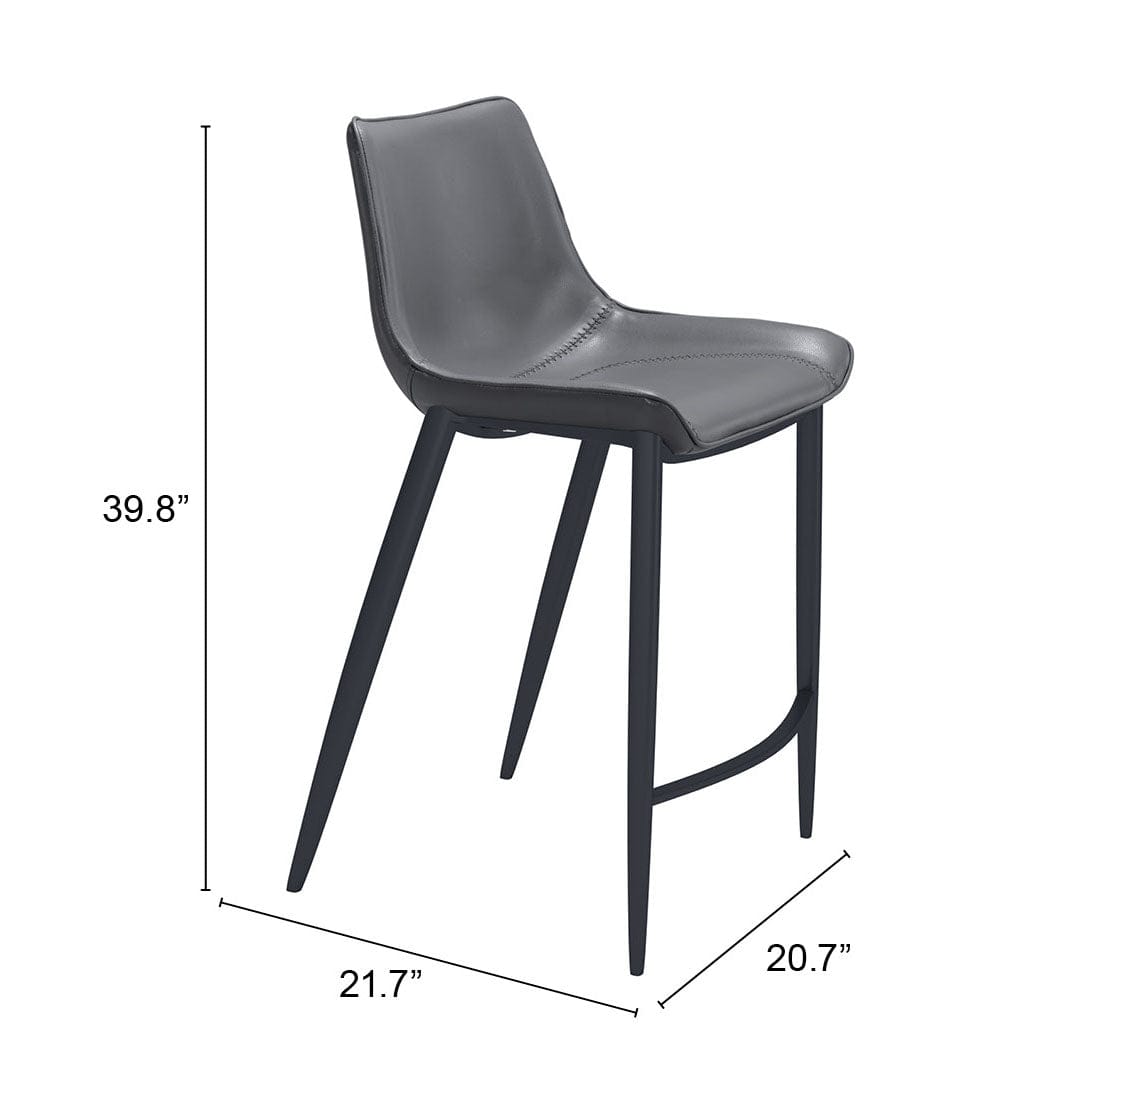 Measurements of Bar Chair